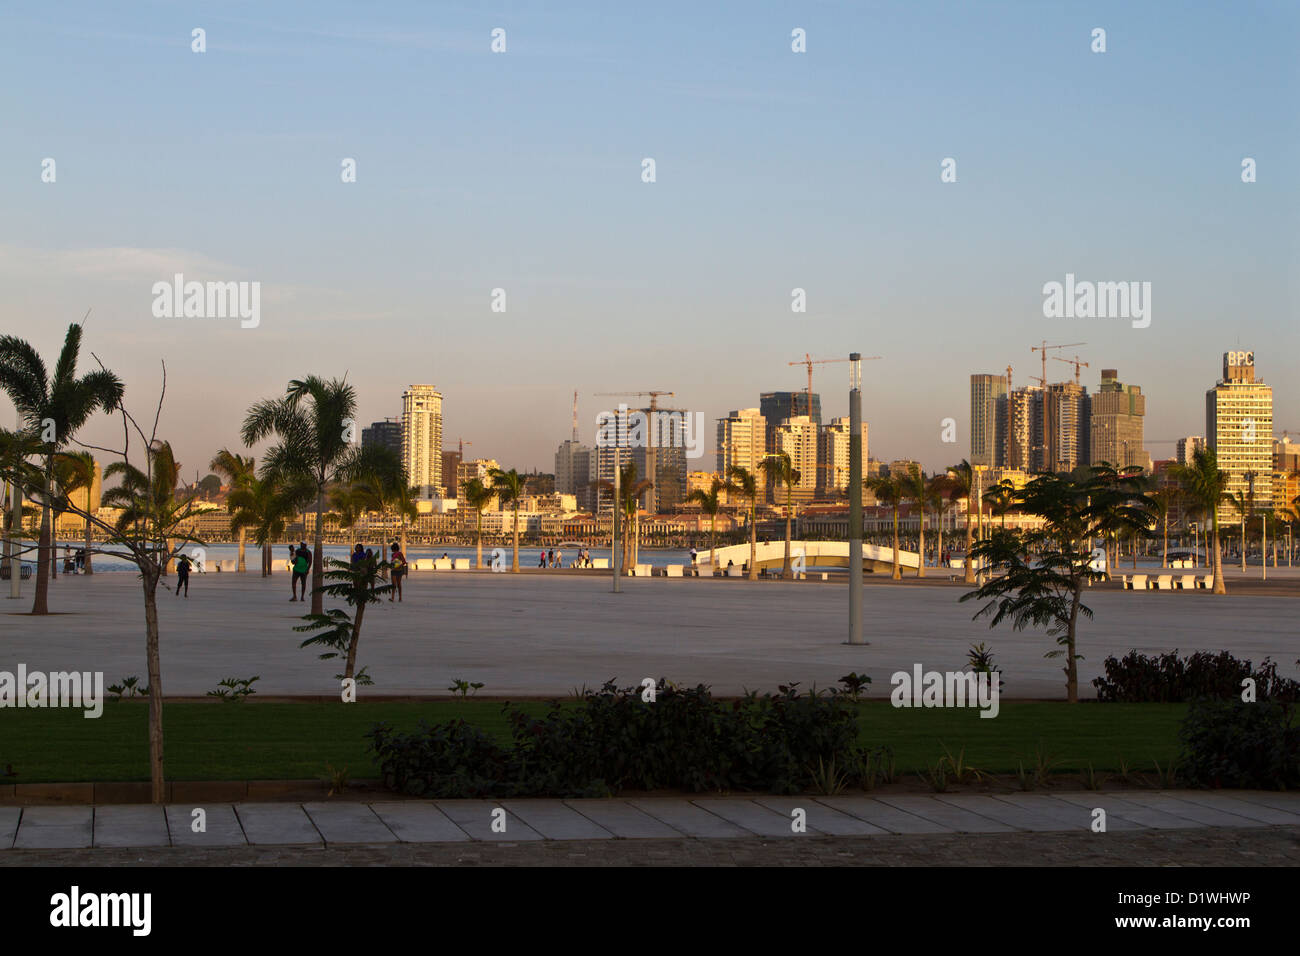 Marginal von Luanda, Angola Stockfoto